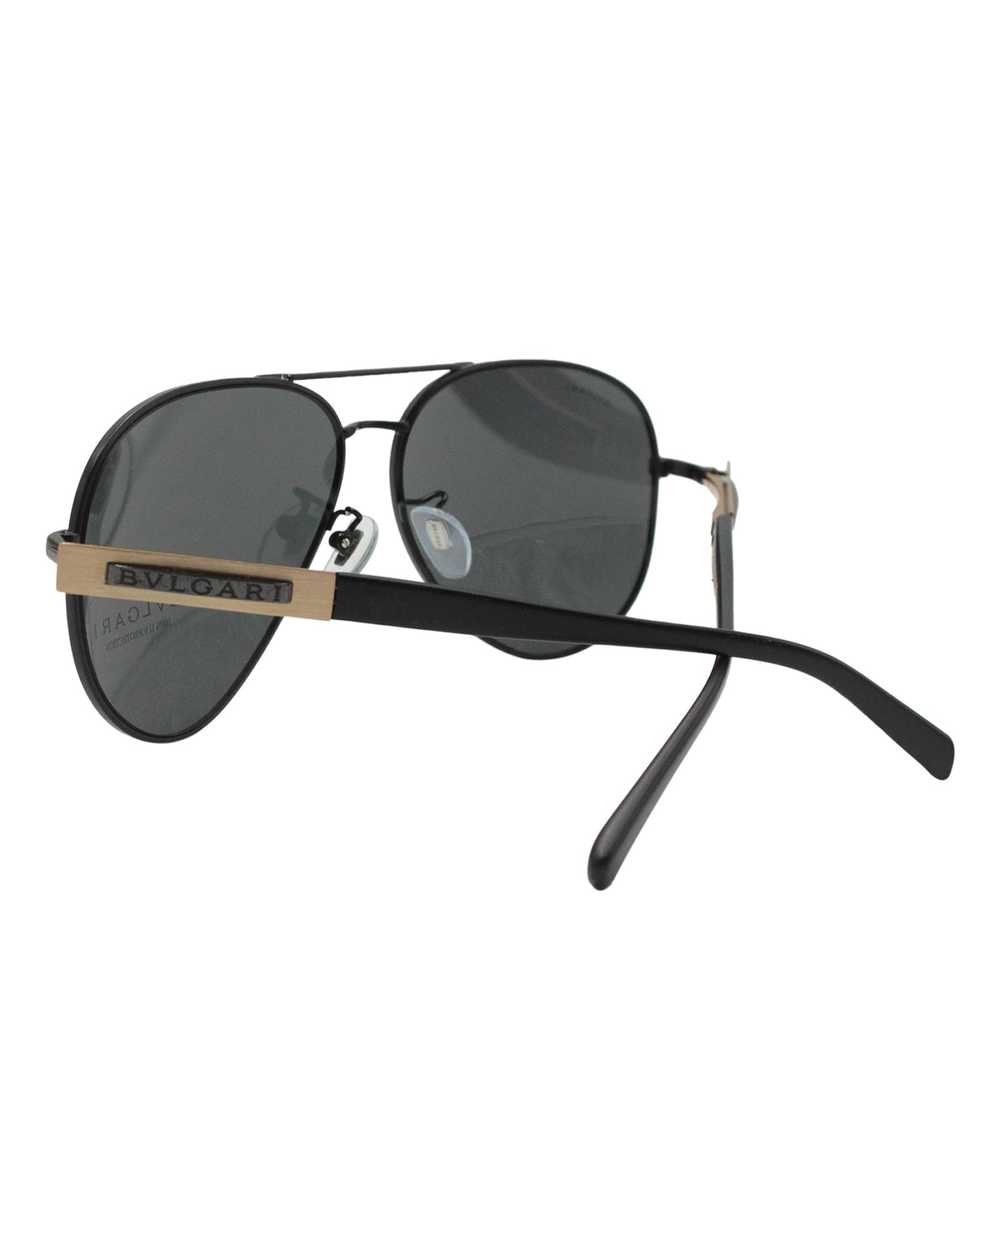 Product Details Bvlgari Black Aviator Sunglasses - image 3